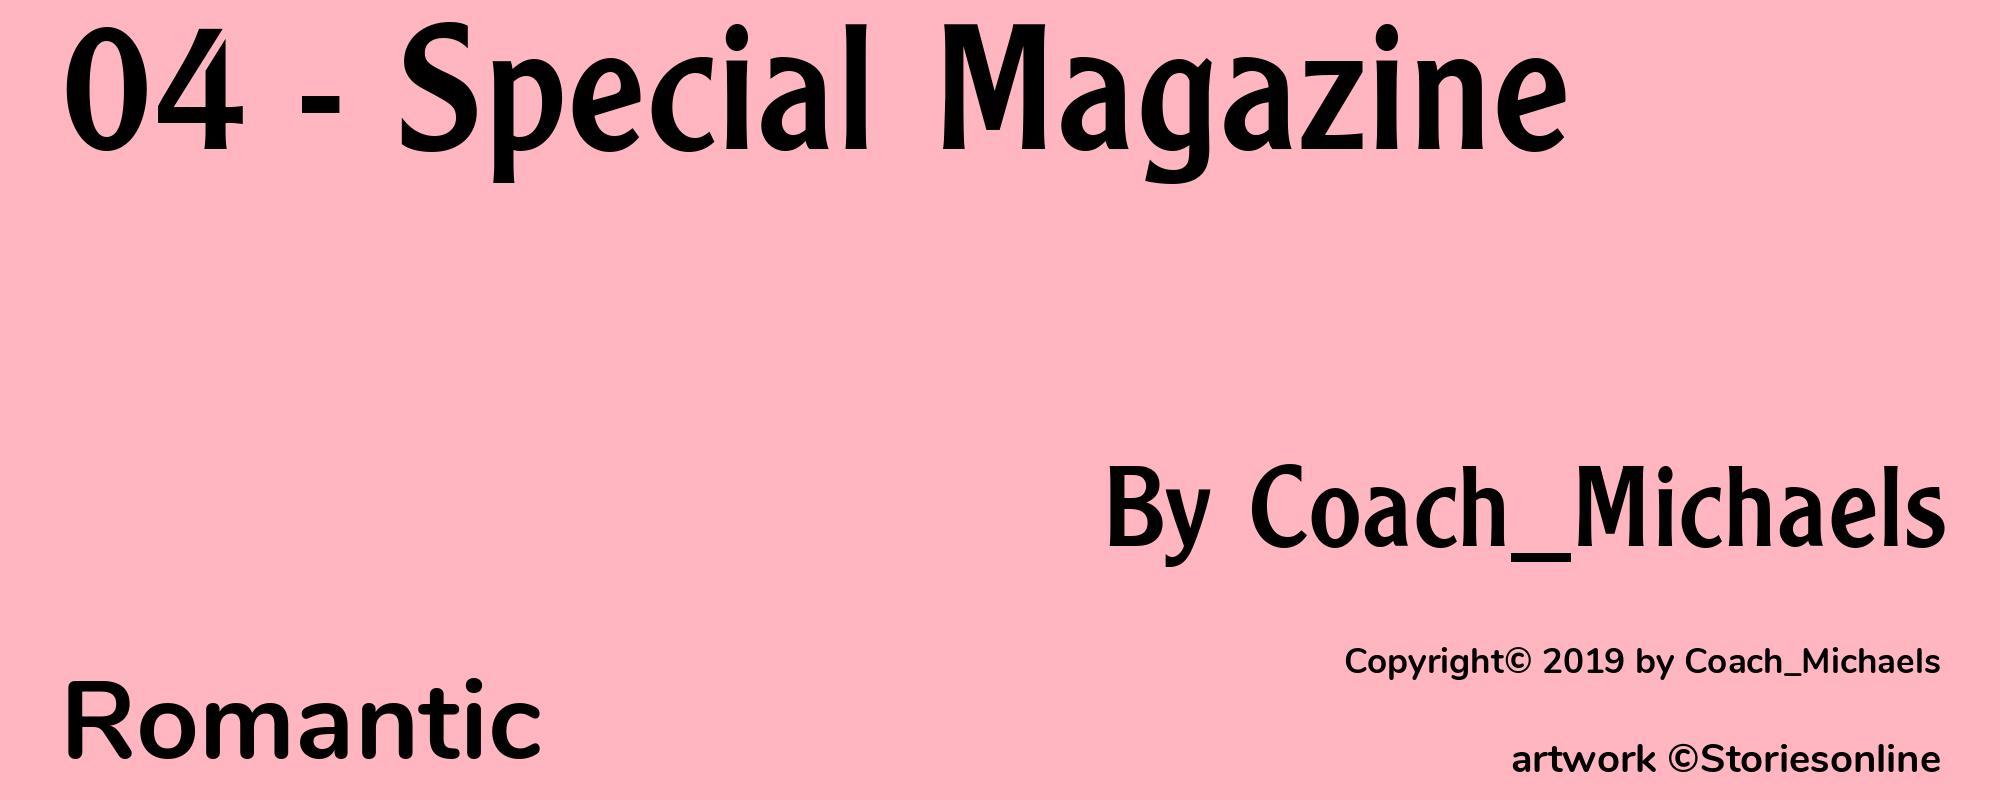 04 - Special Magazine - Cover